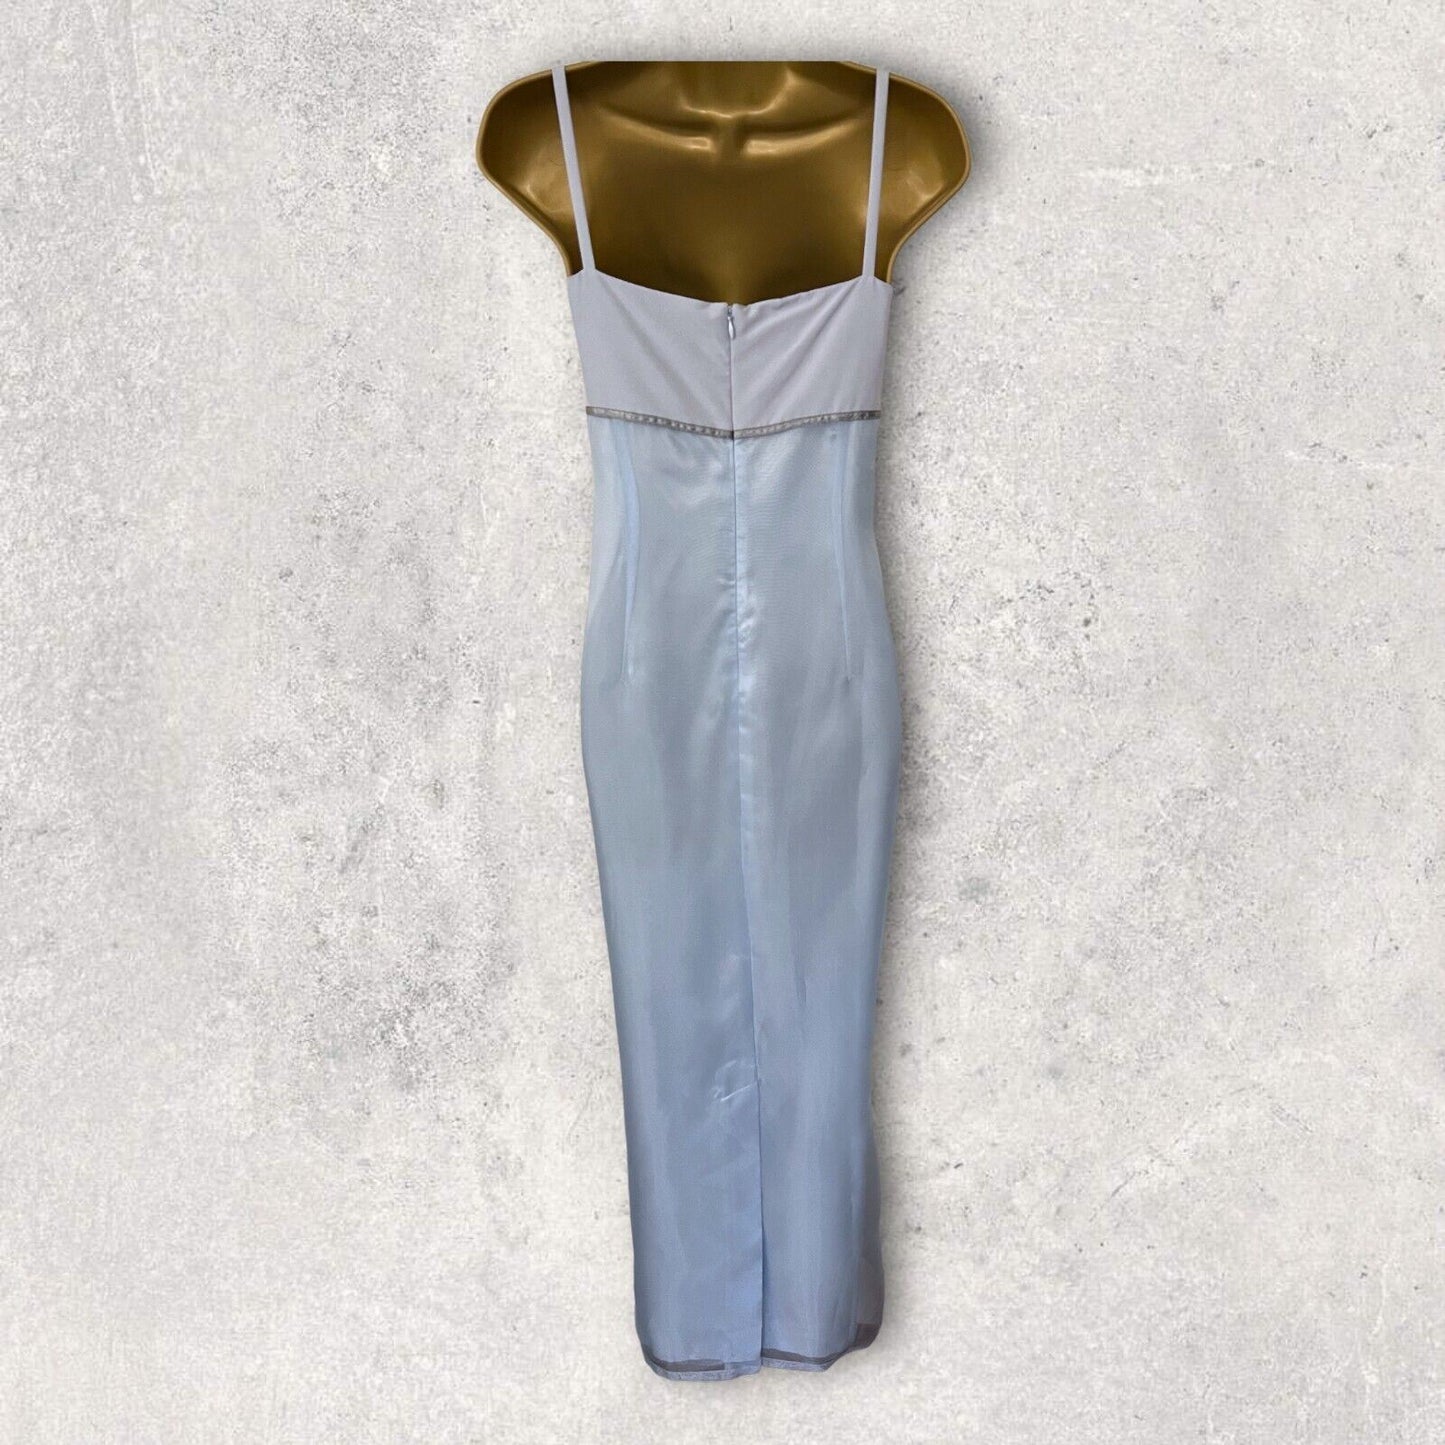 Zapa Ice Blue, Long Organza Snowflake Dress UK 12 US 8 EU 40 BNWT RRP £245 Timeless Fashions